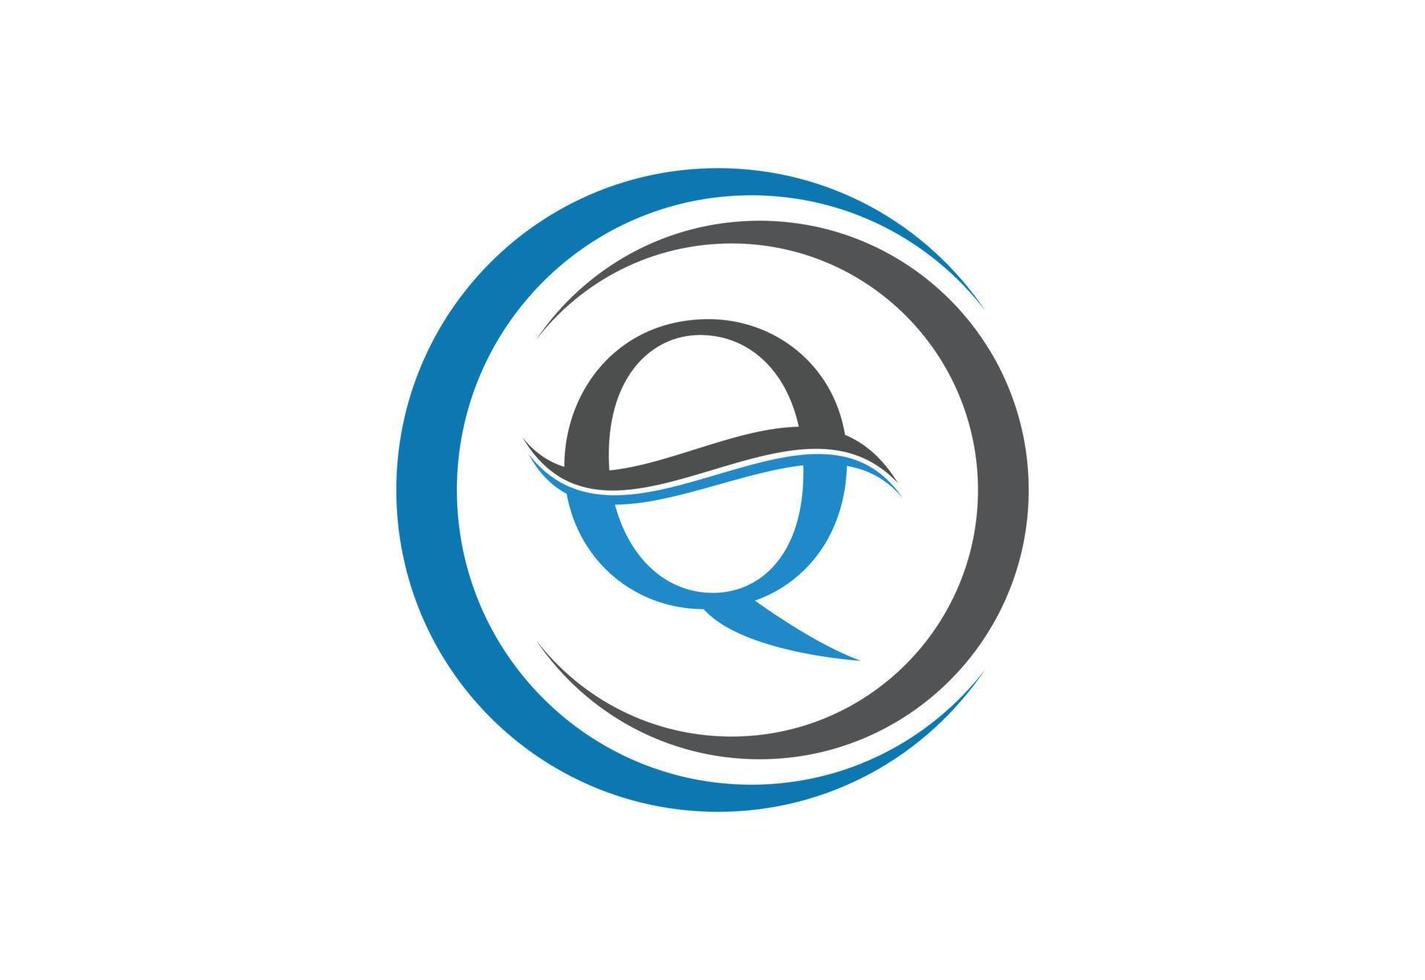 Letter Q logo design template, Vector illustration